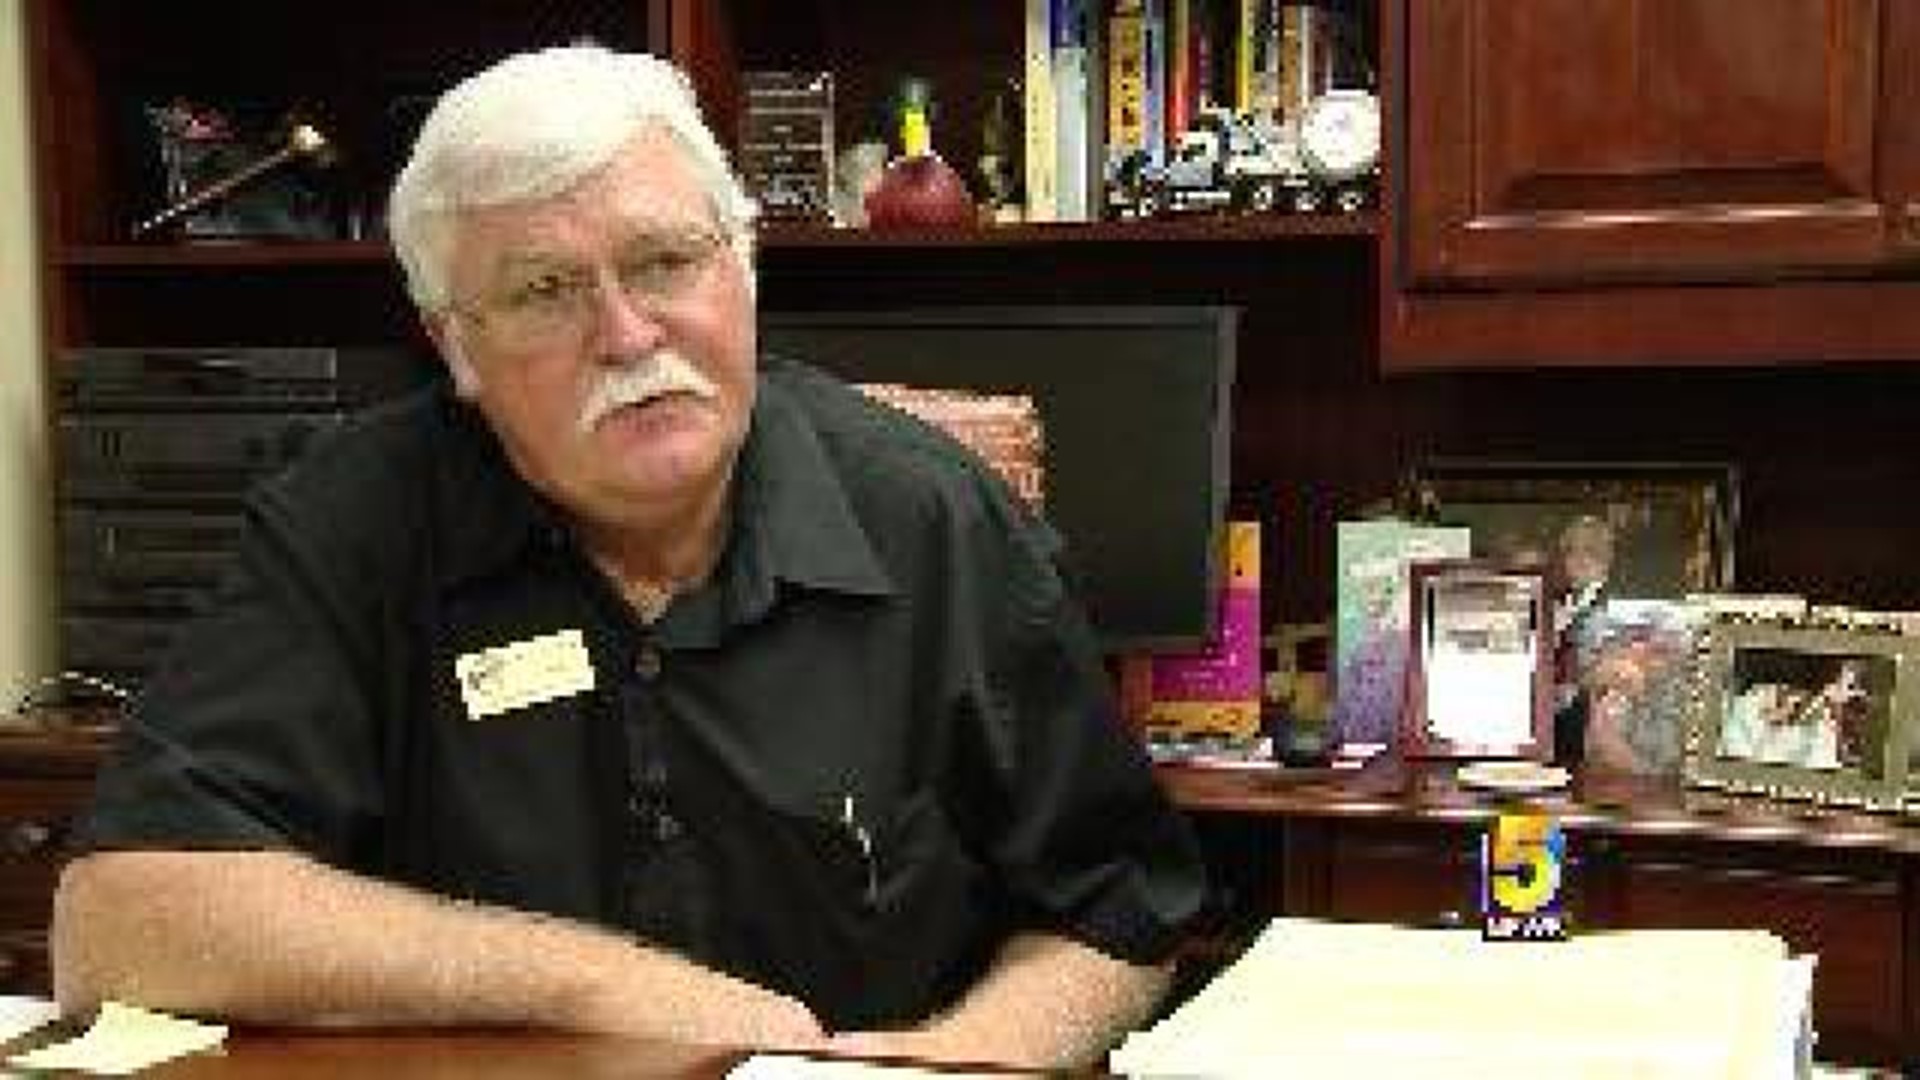 Benton County Judge Explains Recent Hospitalization